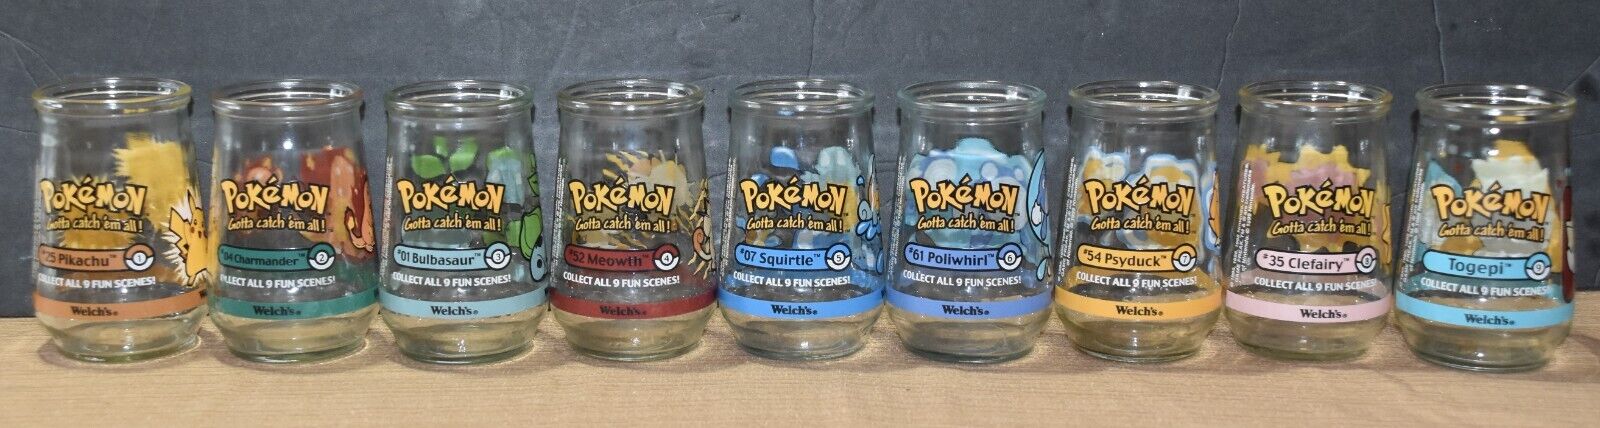 Pokémon Welch’s Jelly Jar Set 9 of 9